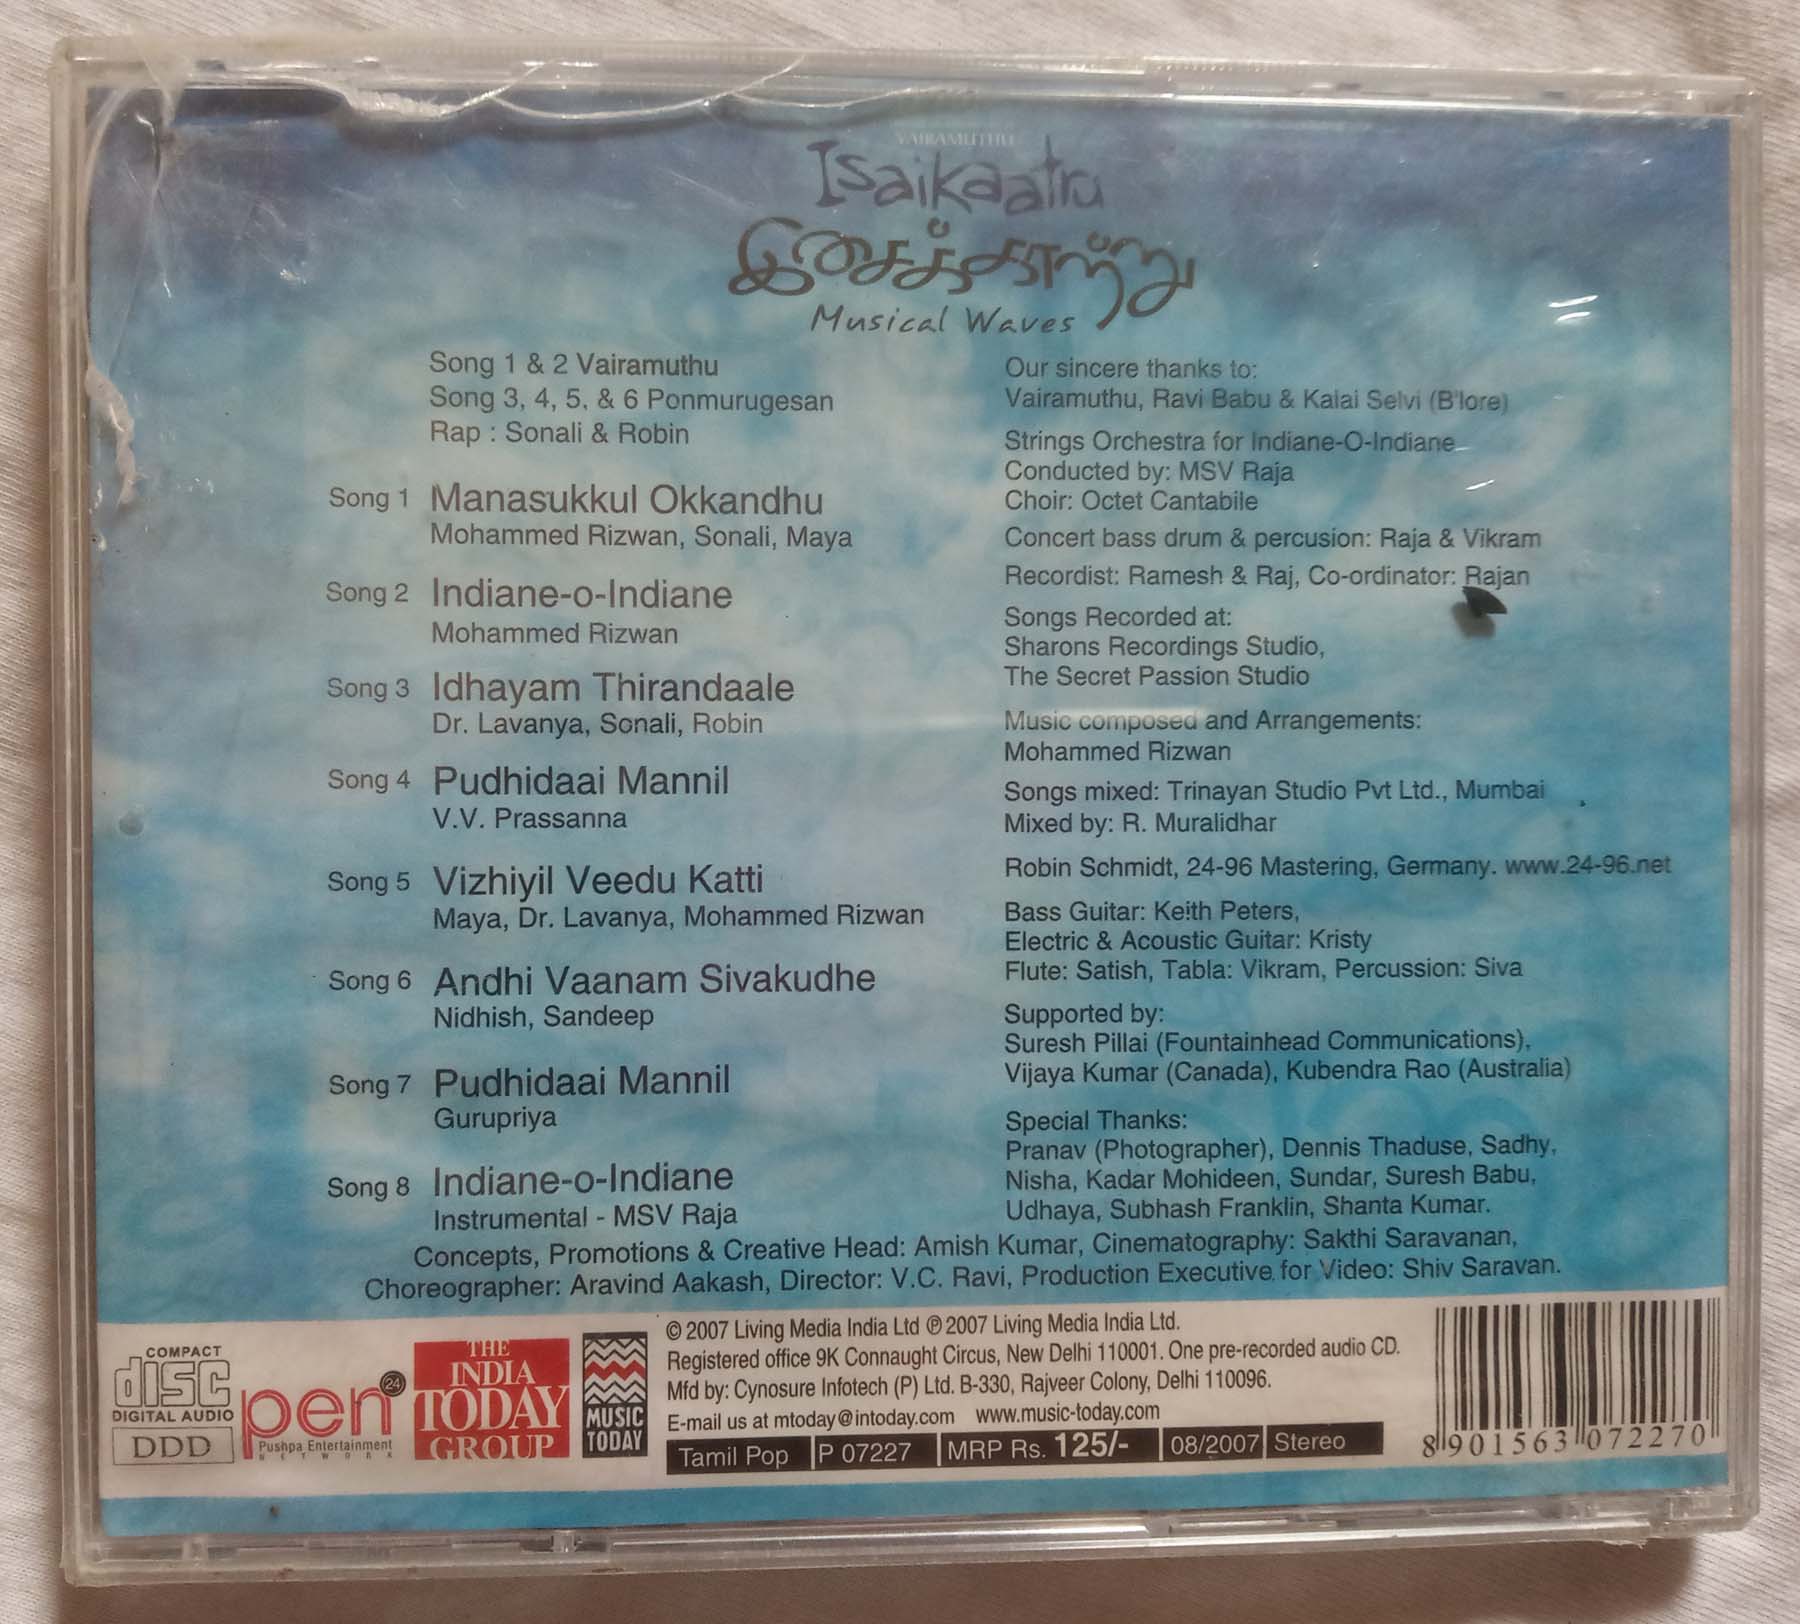 Vairamuthu Isaikaatru Musical Waves Tamil Audio CD